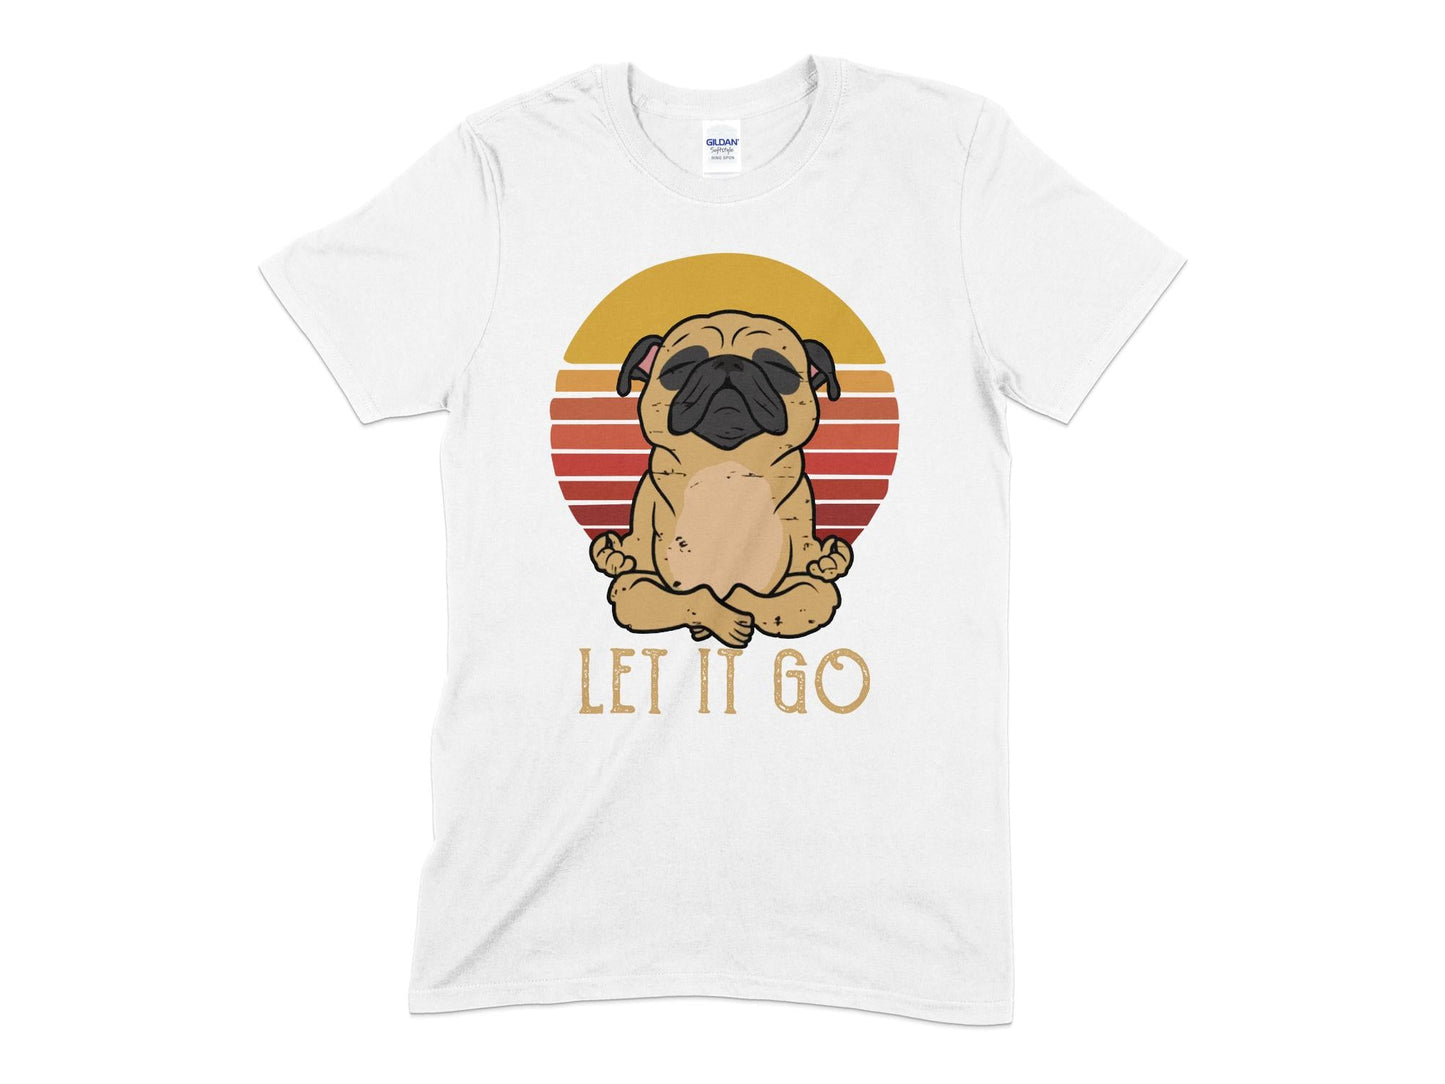 yoga namaste dog t-shirt - Premium t-shirt from MyDesigns - Just $19.95! Shop now at Lees Krazy Teez